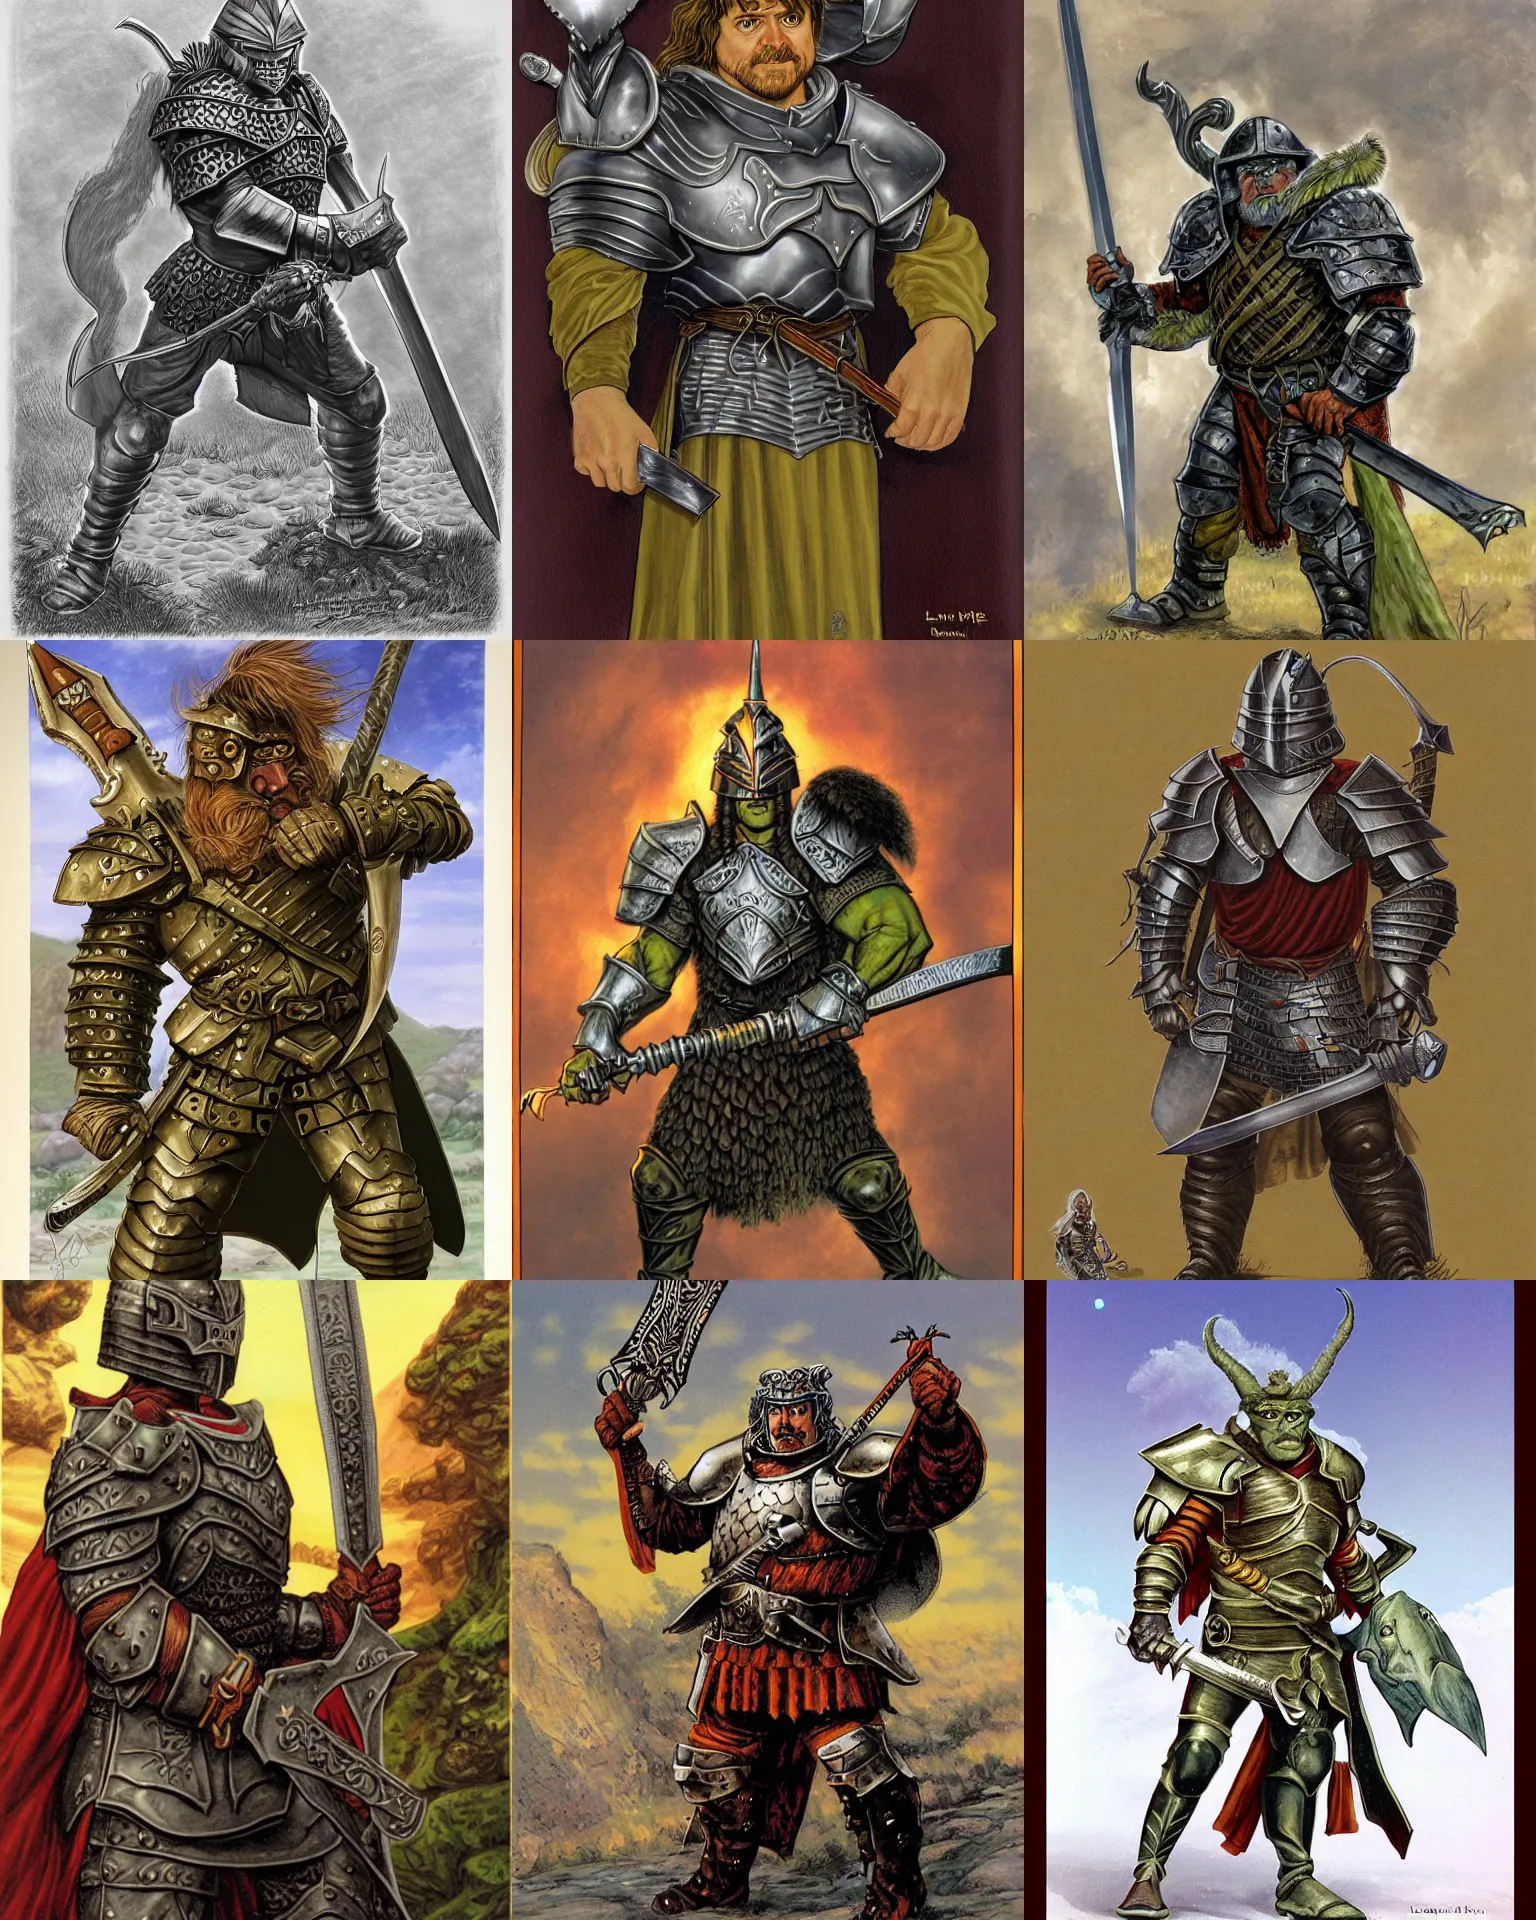 Prompt: ron pelrman as ogre paladin, helmet, plate armor, sword, portrait by larry elmore, dnd